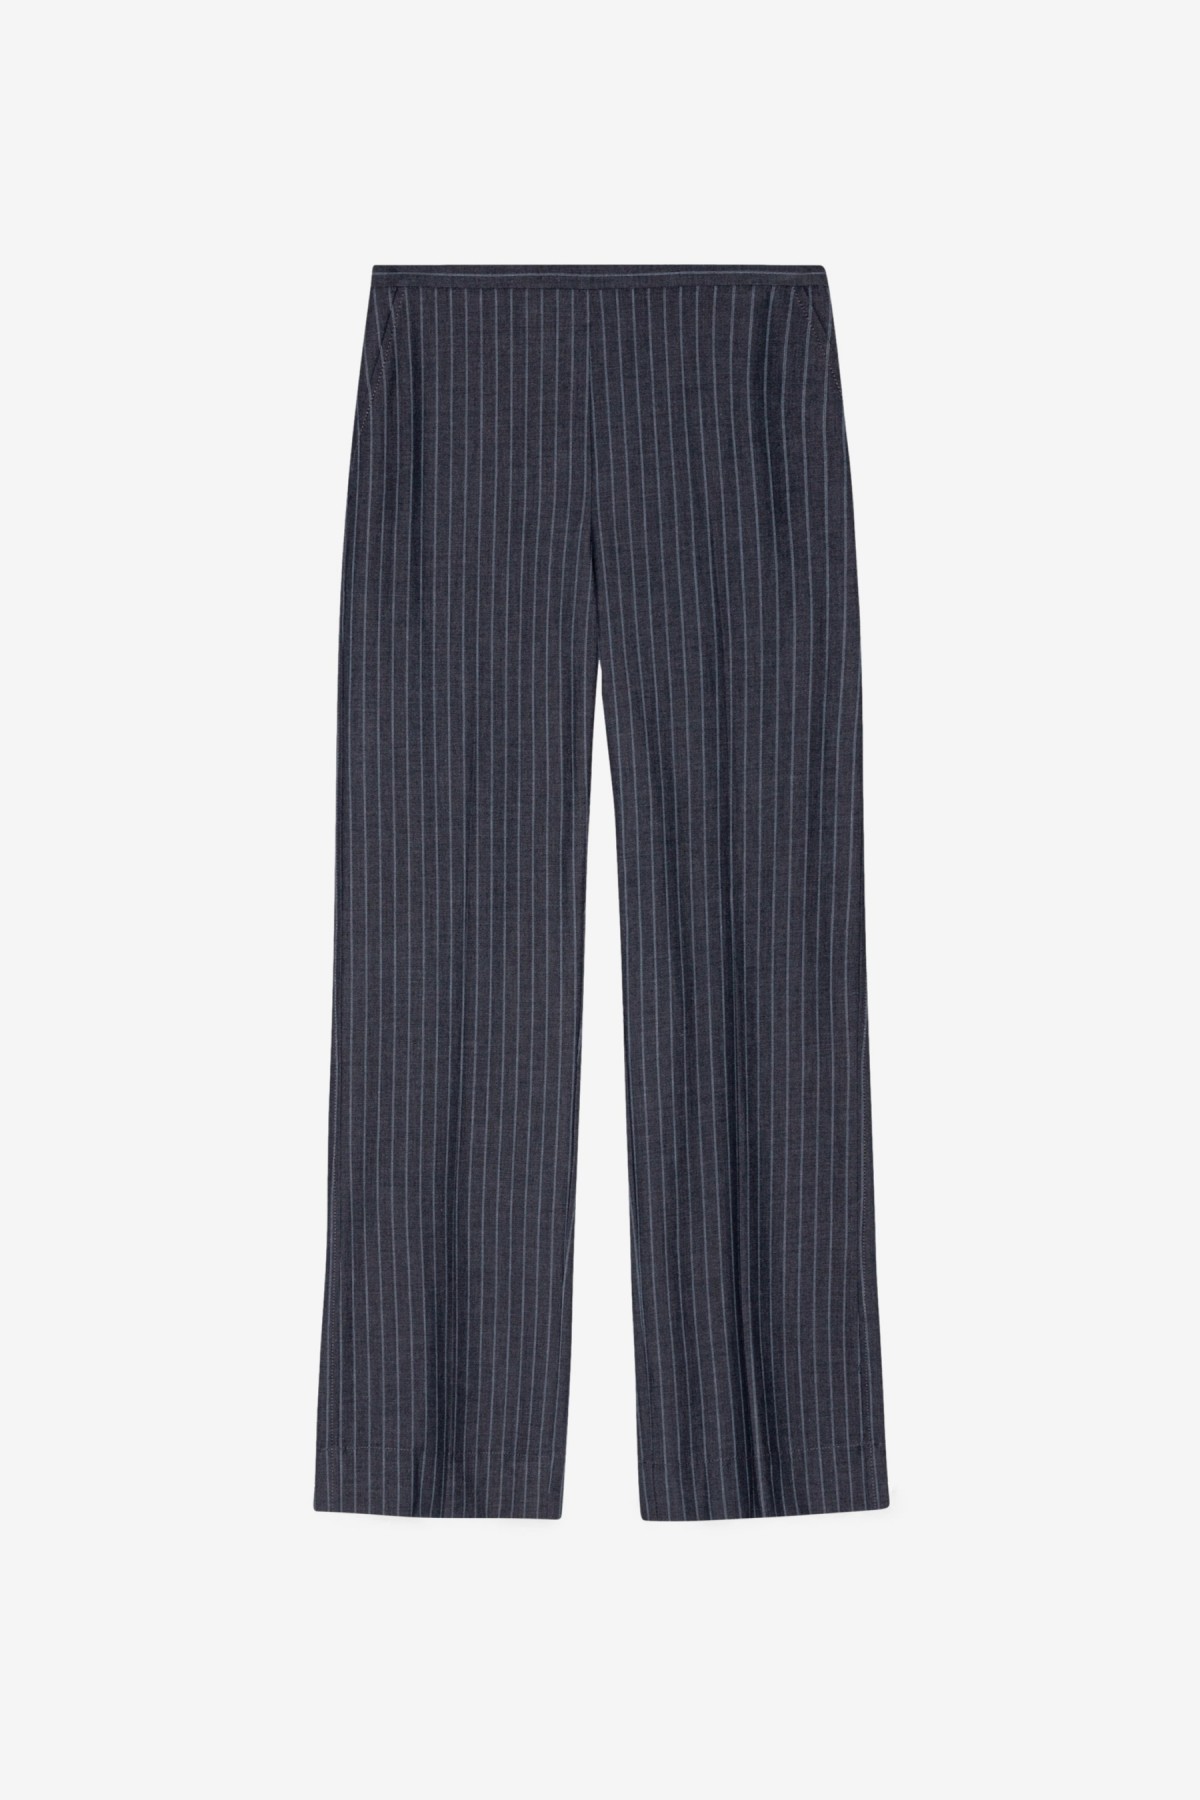 Ganni Stretch Stripe Mid Waist Pants in Gray Pinstripe